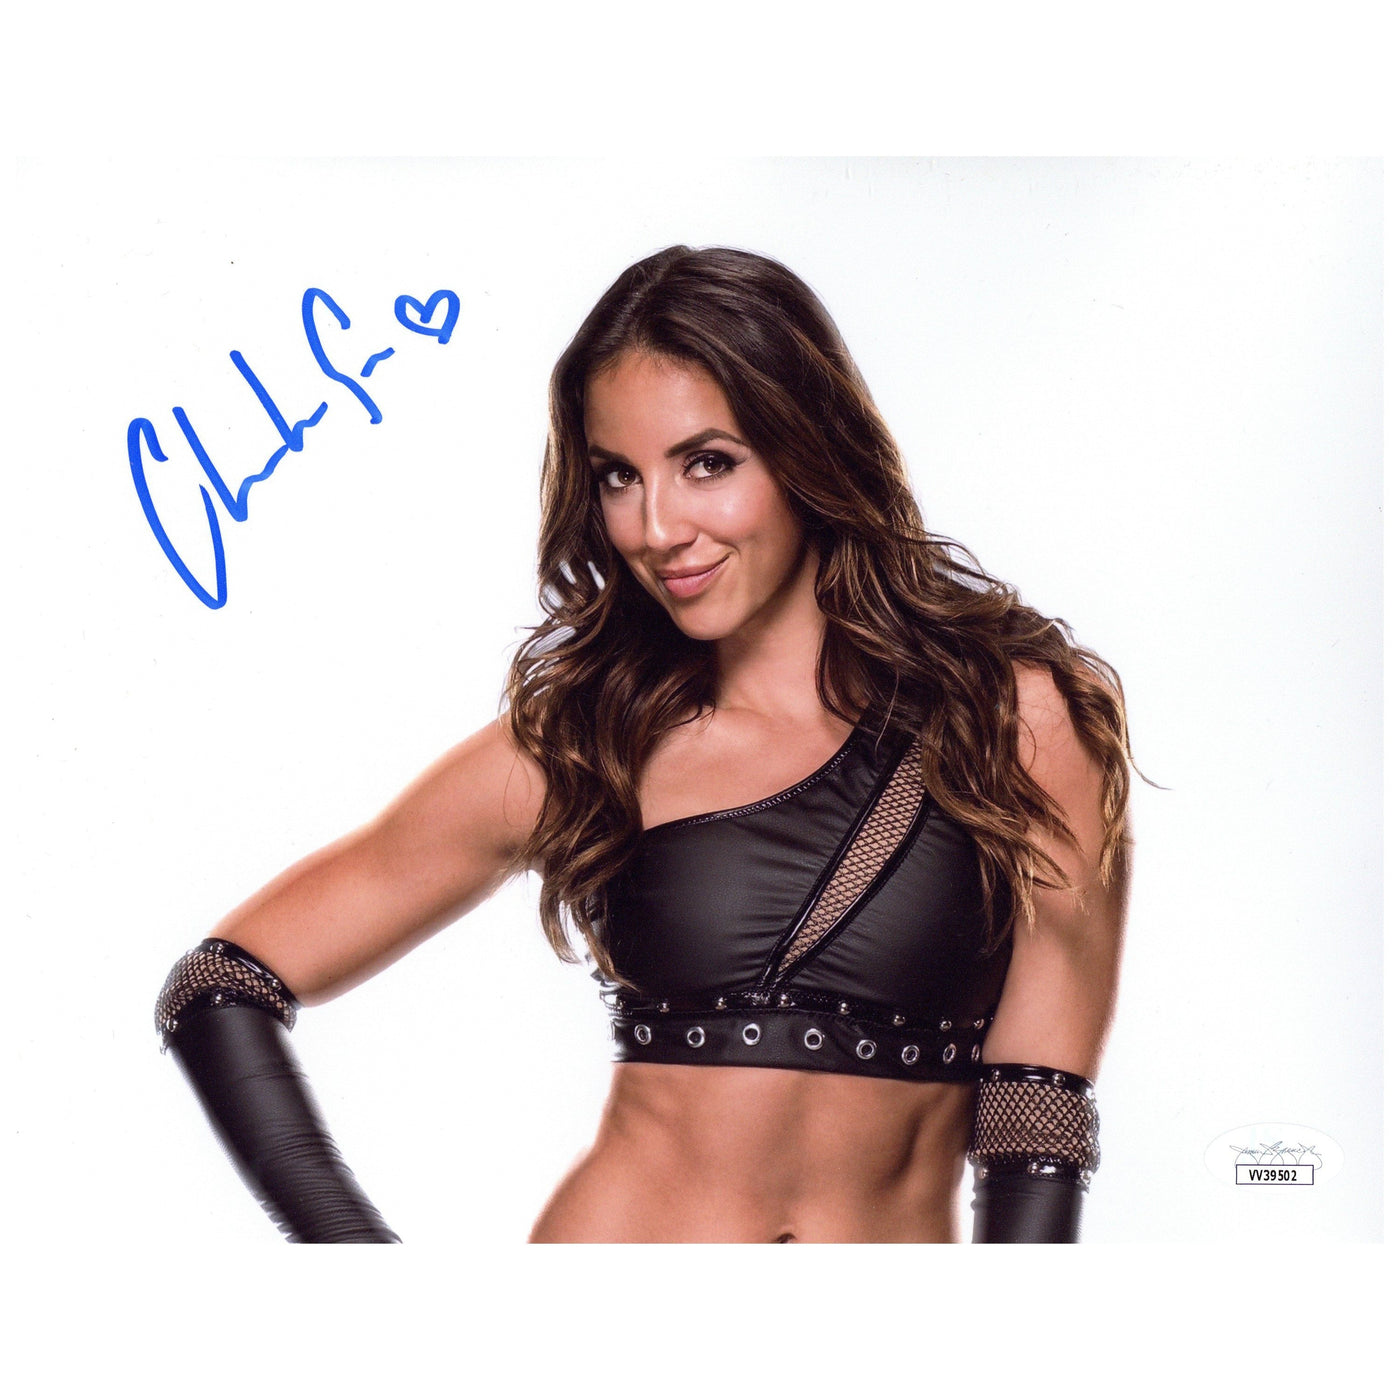 Chelsea Green Signed 8x10 Photo Wrestling Autographed JSA COA 3